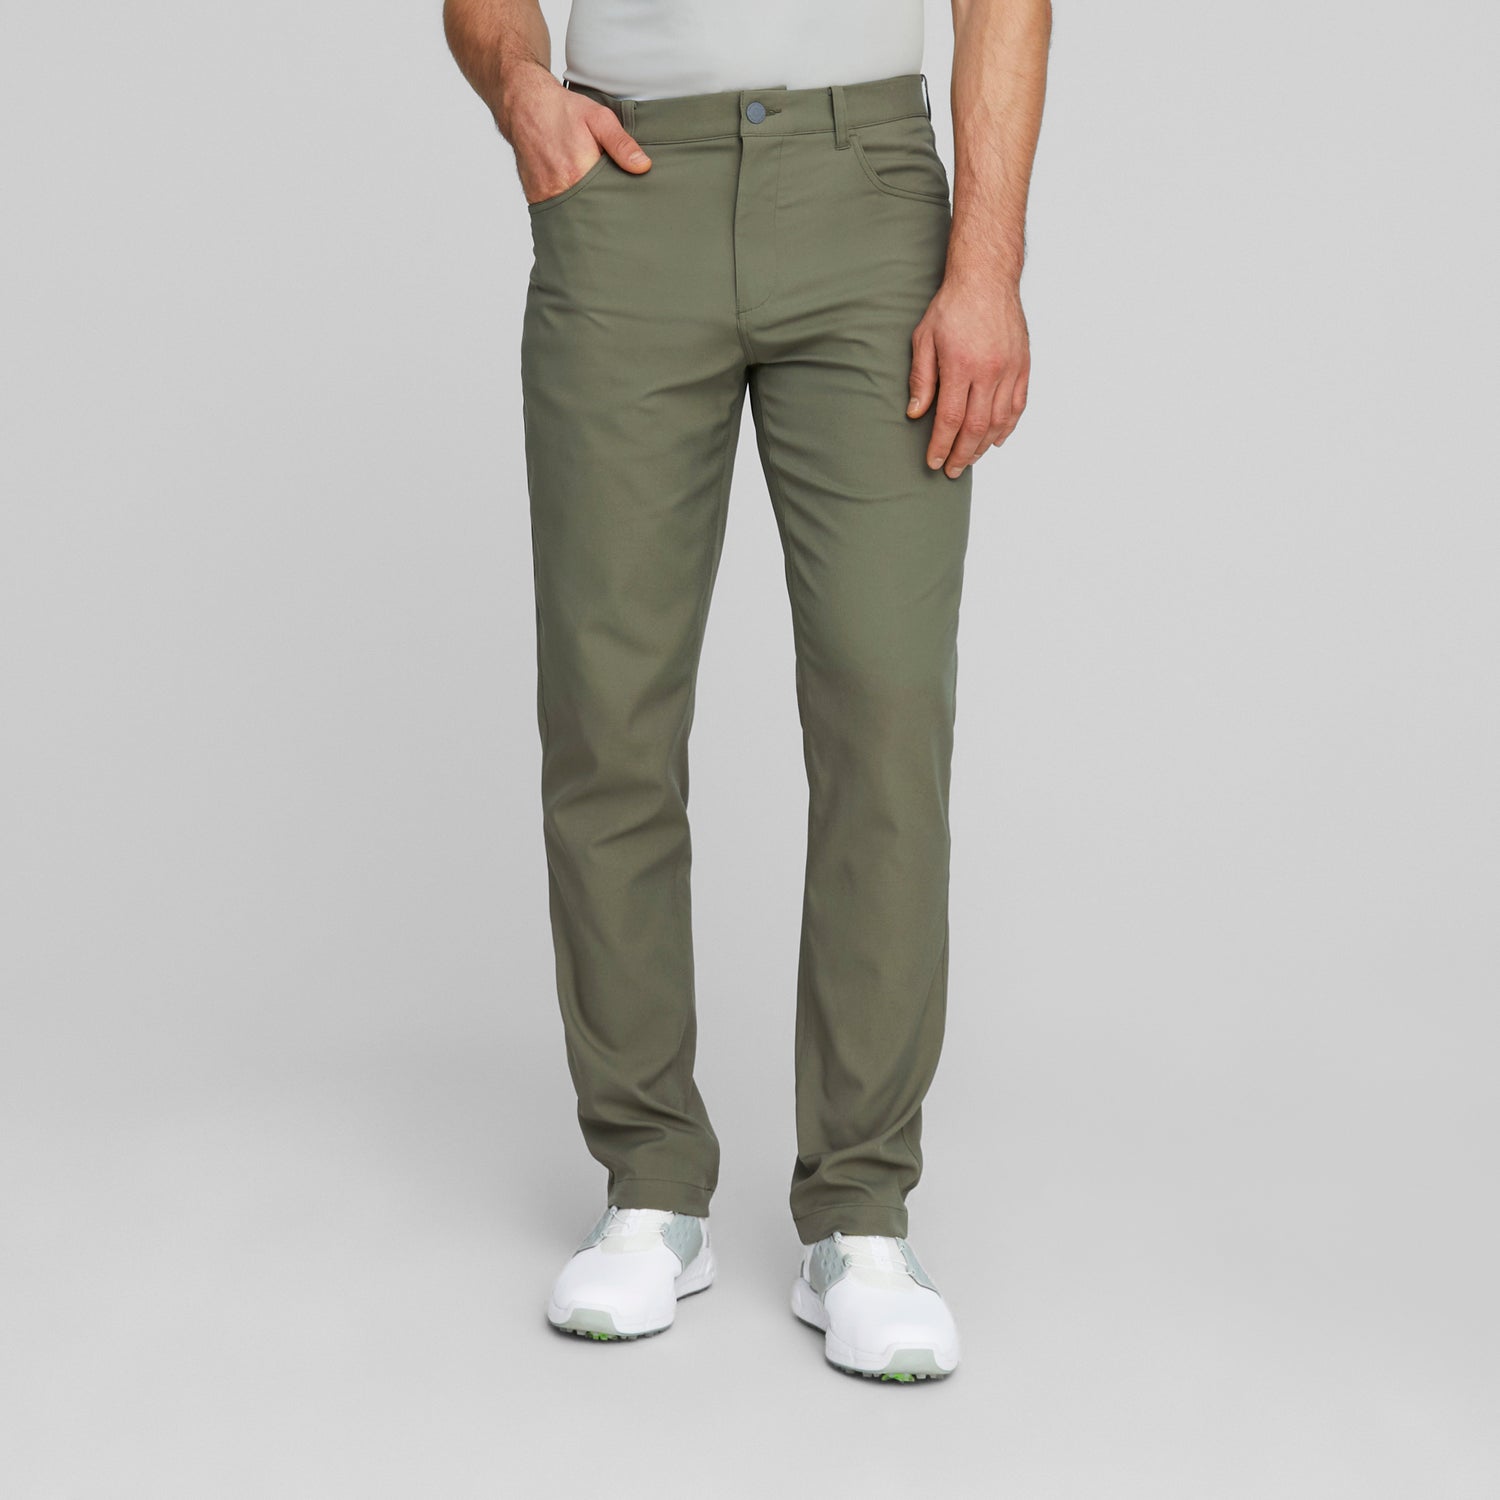 Now @ Golf Locker: Peter Millar Cotton Flannel 5-Pocket Golf Pants - ON SALE